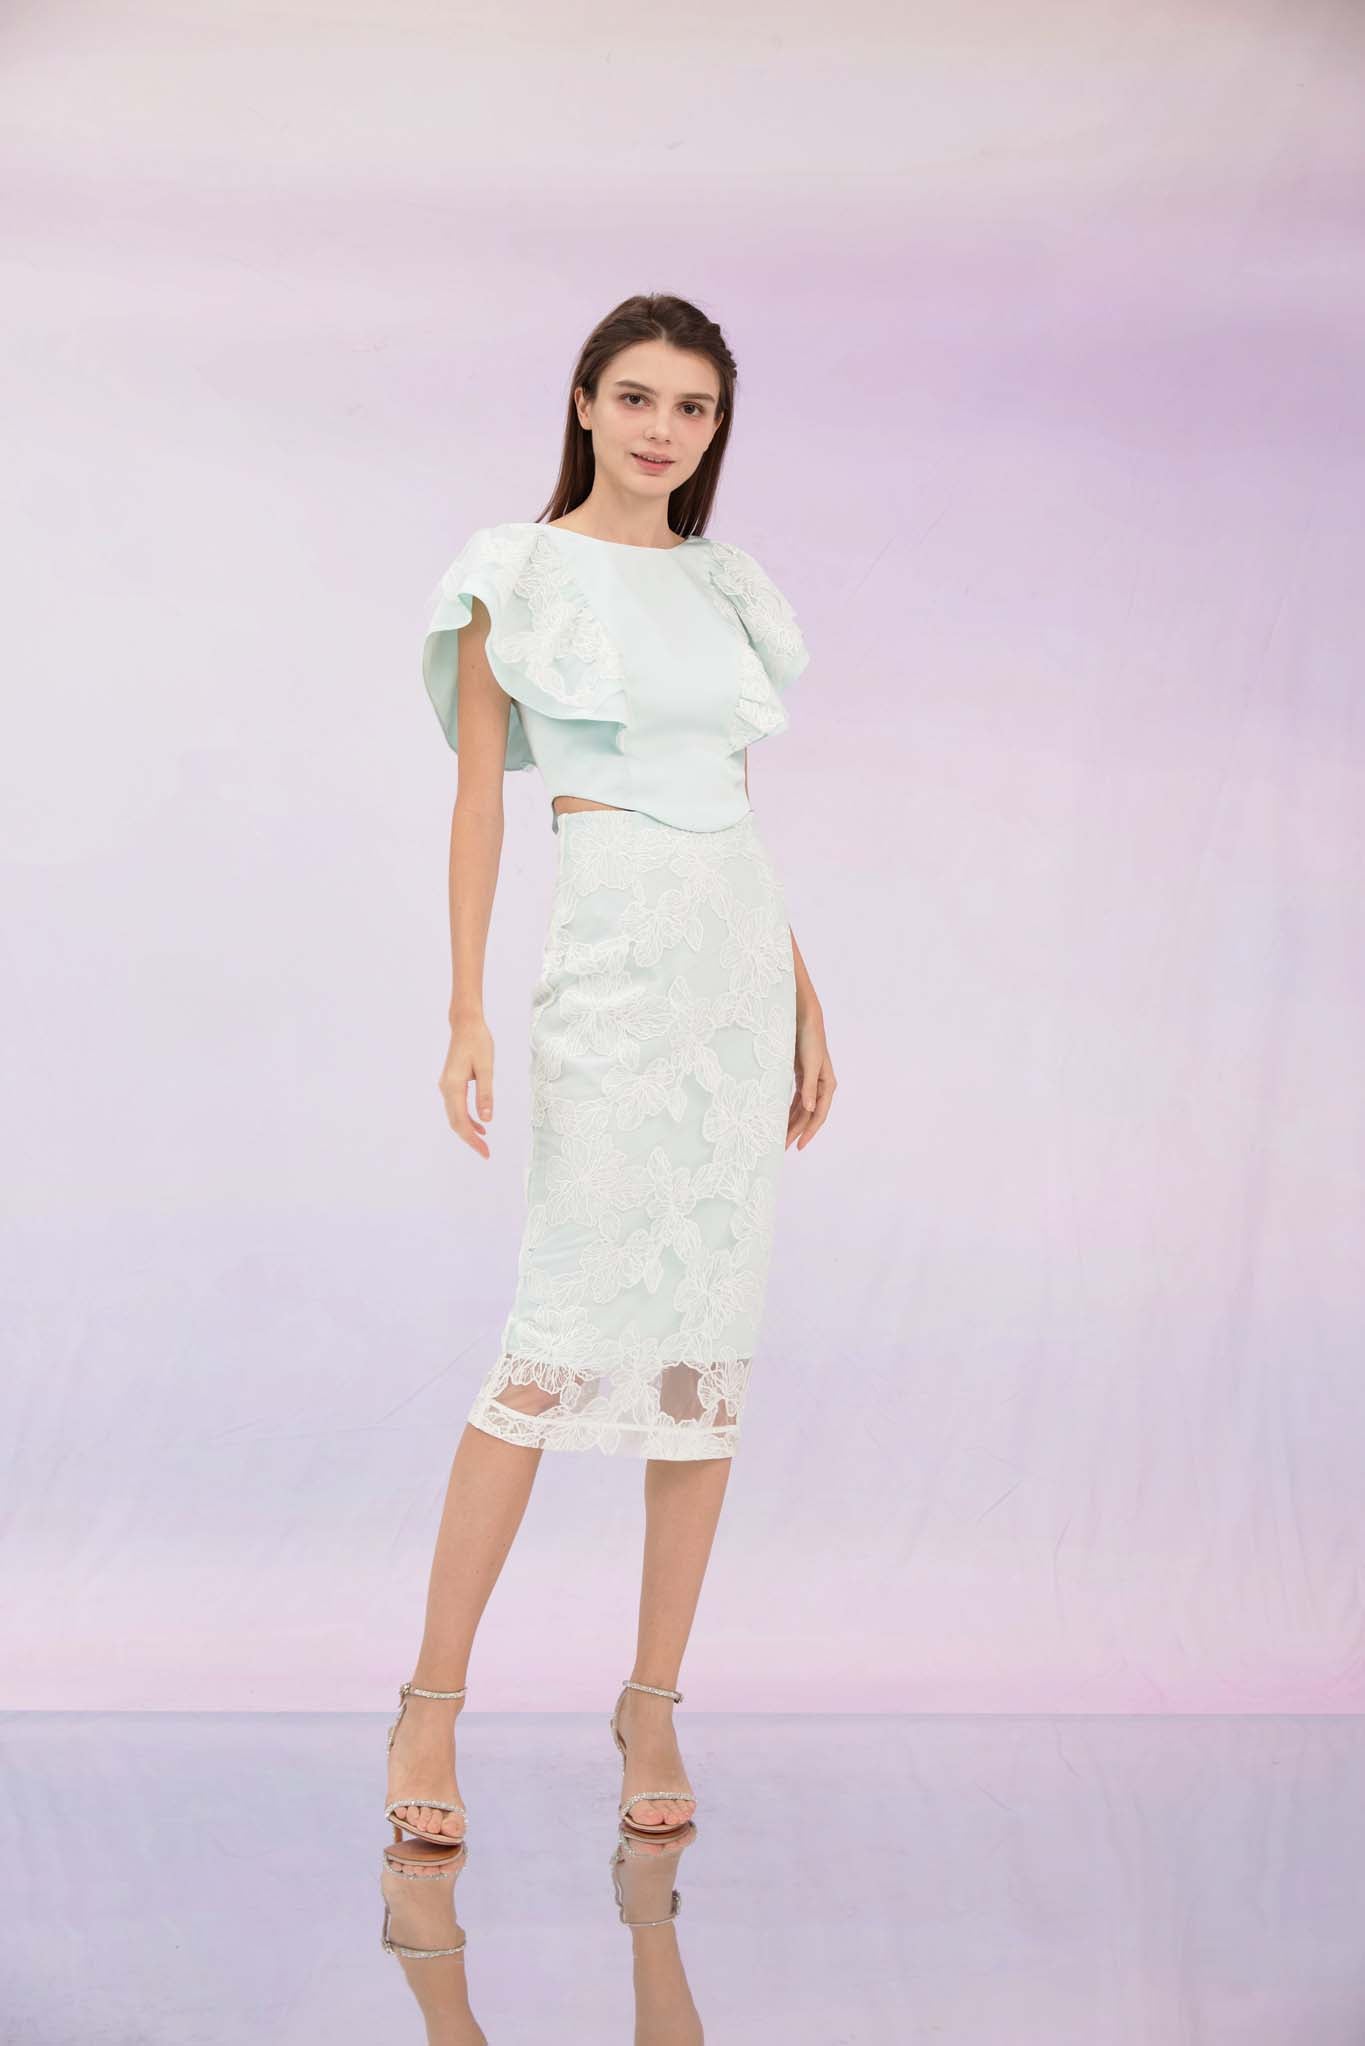 Ancelote Mint Lace Pencil Skirt